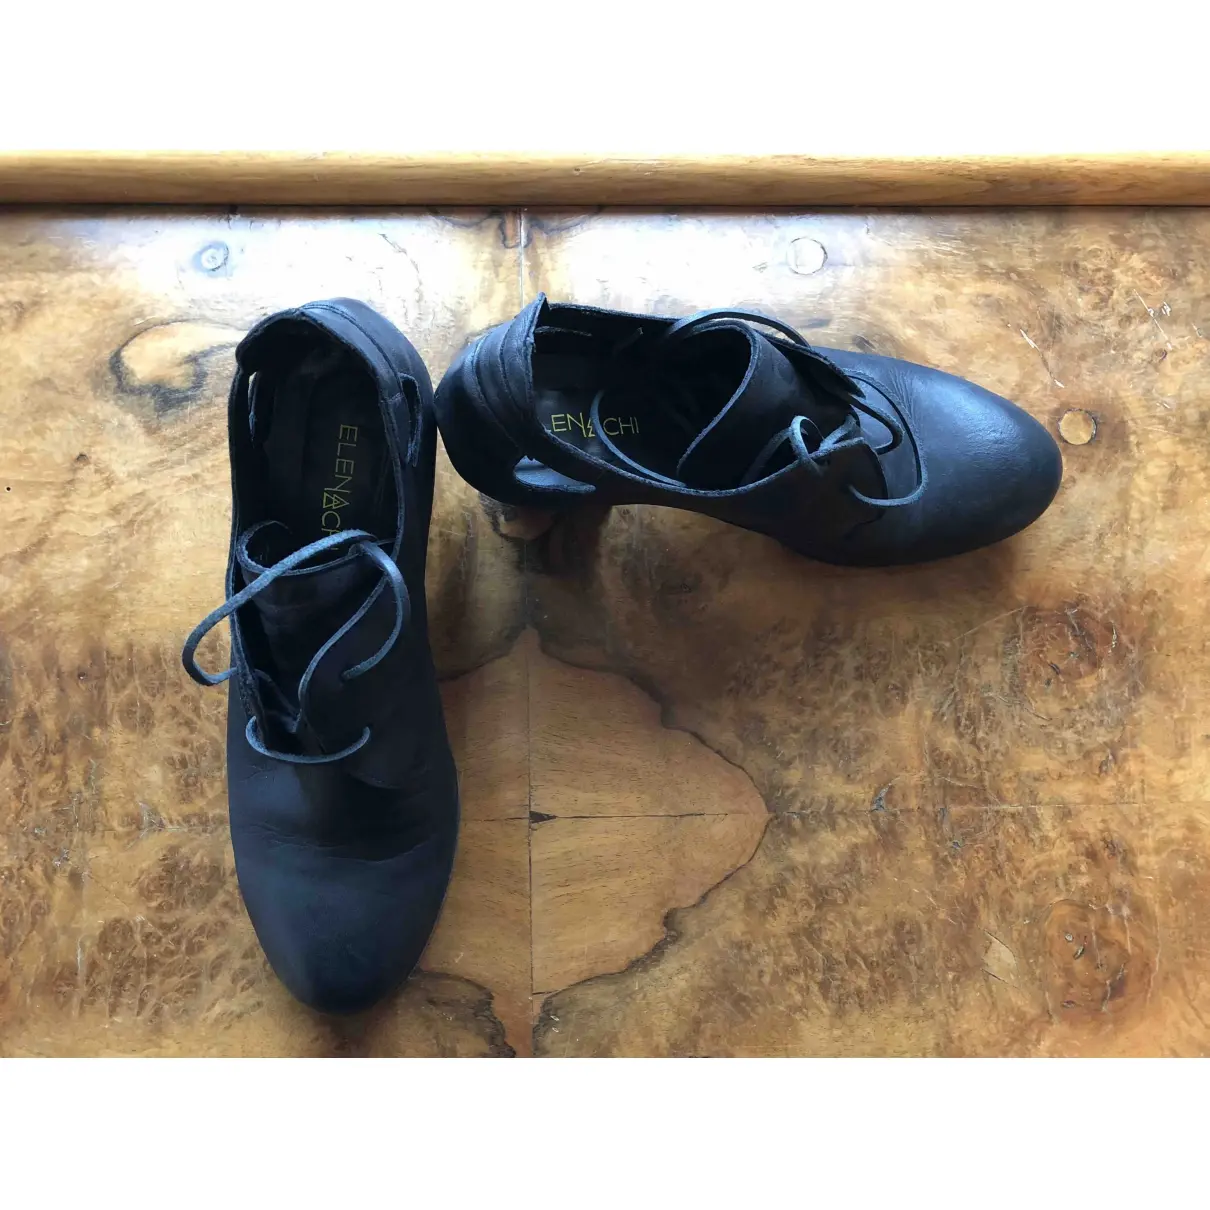 Elena Iachi Leather heels for sale